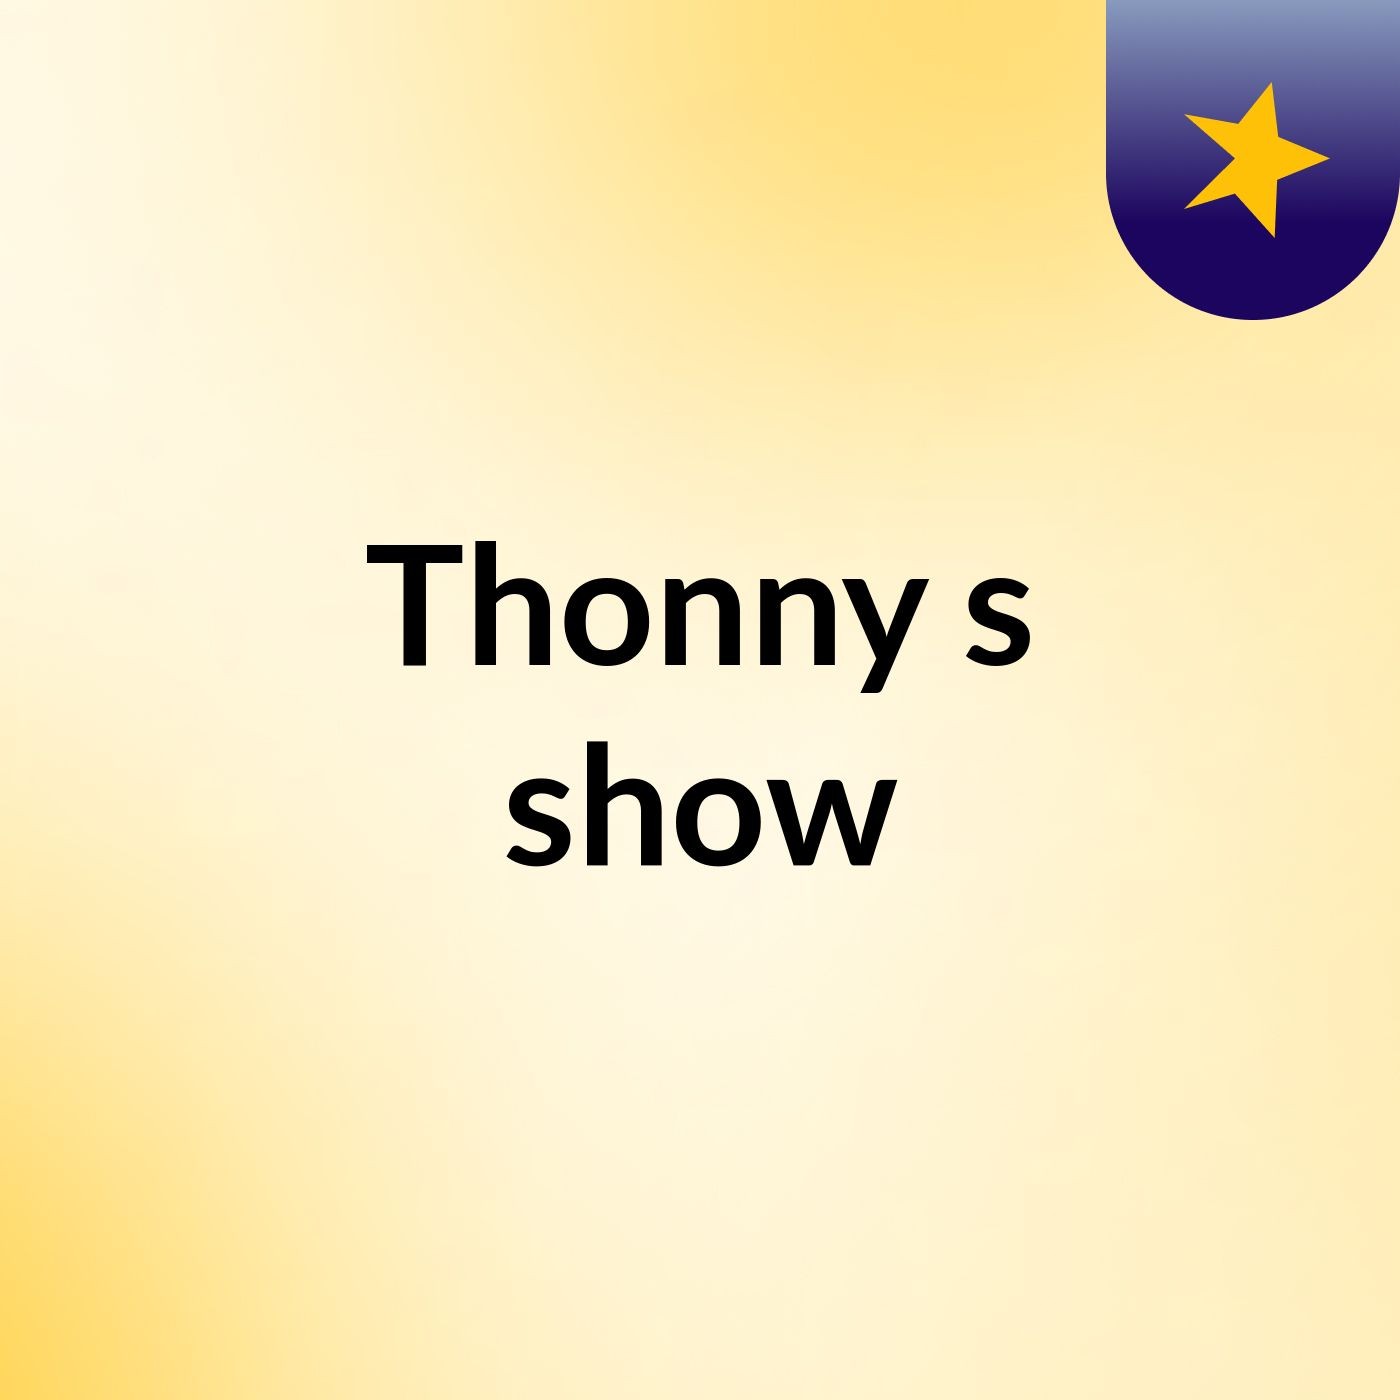 Thonny's show